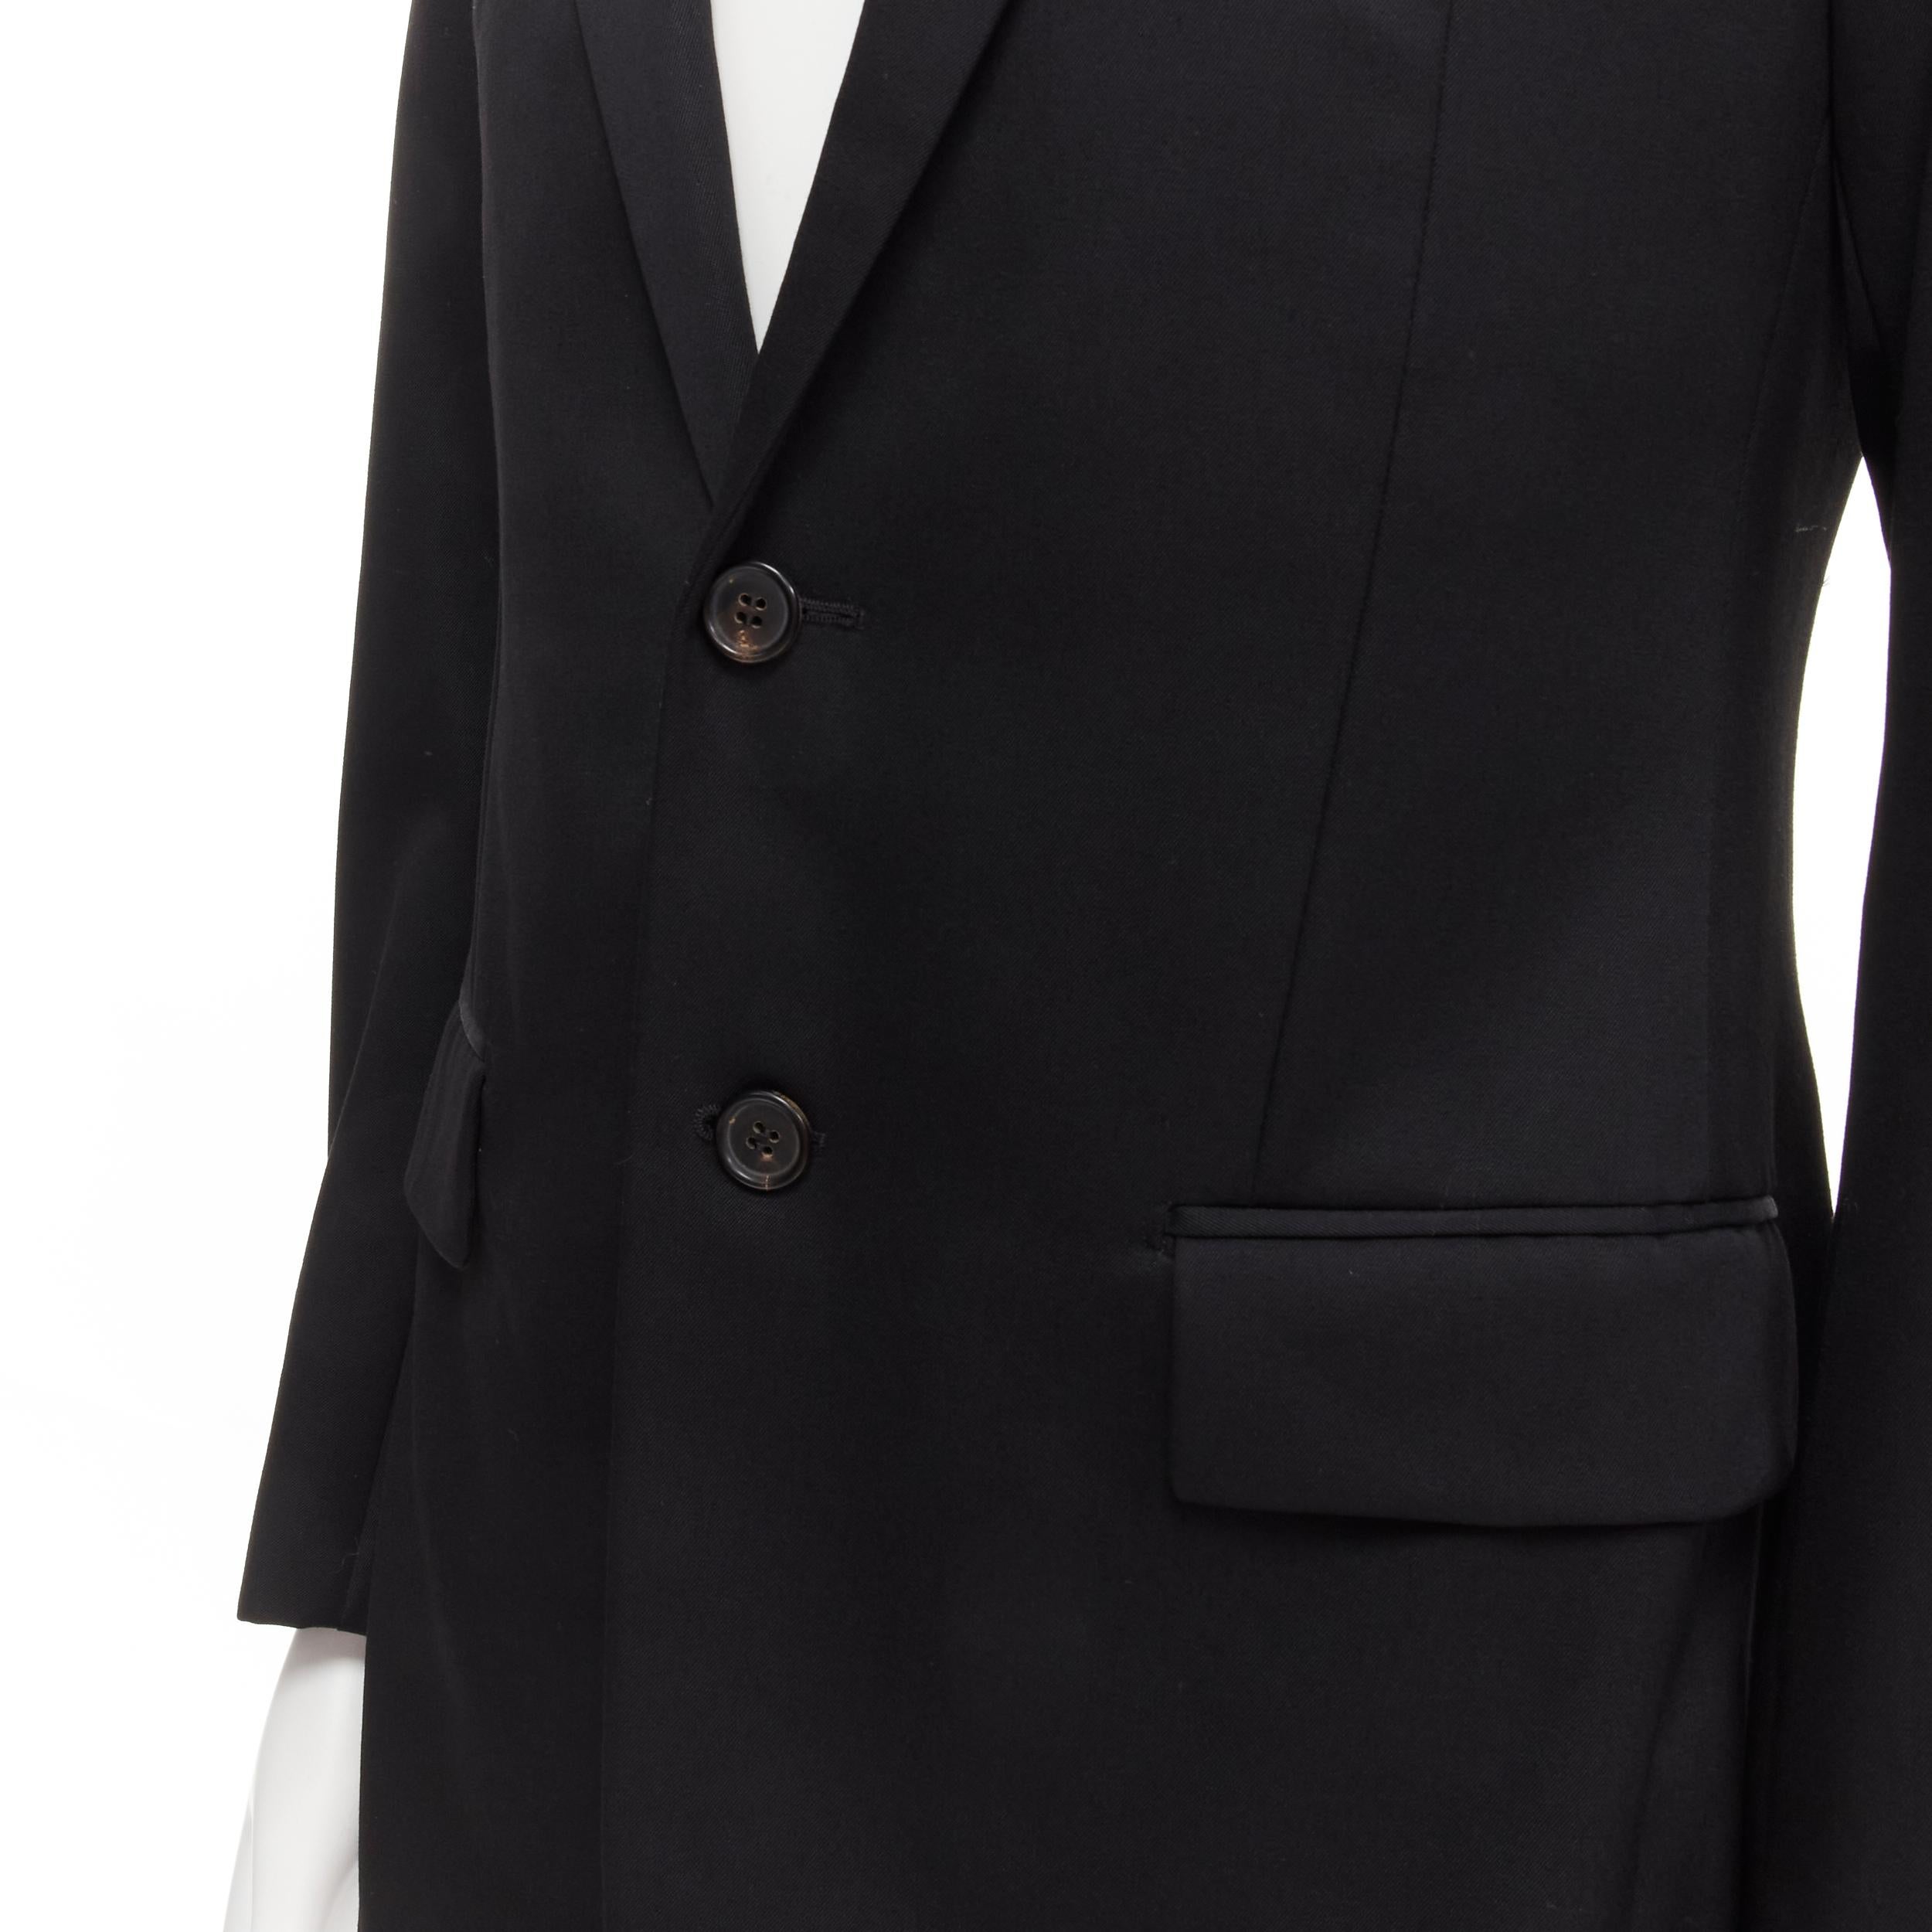 DIOR HOMME Hedi Slimane leather collar classic 2-button blazer jacket FR46 S 4